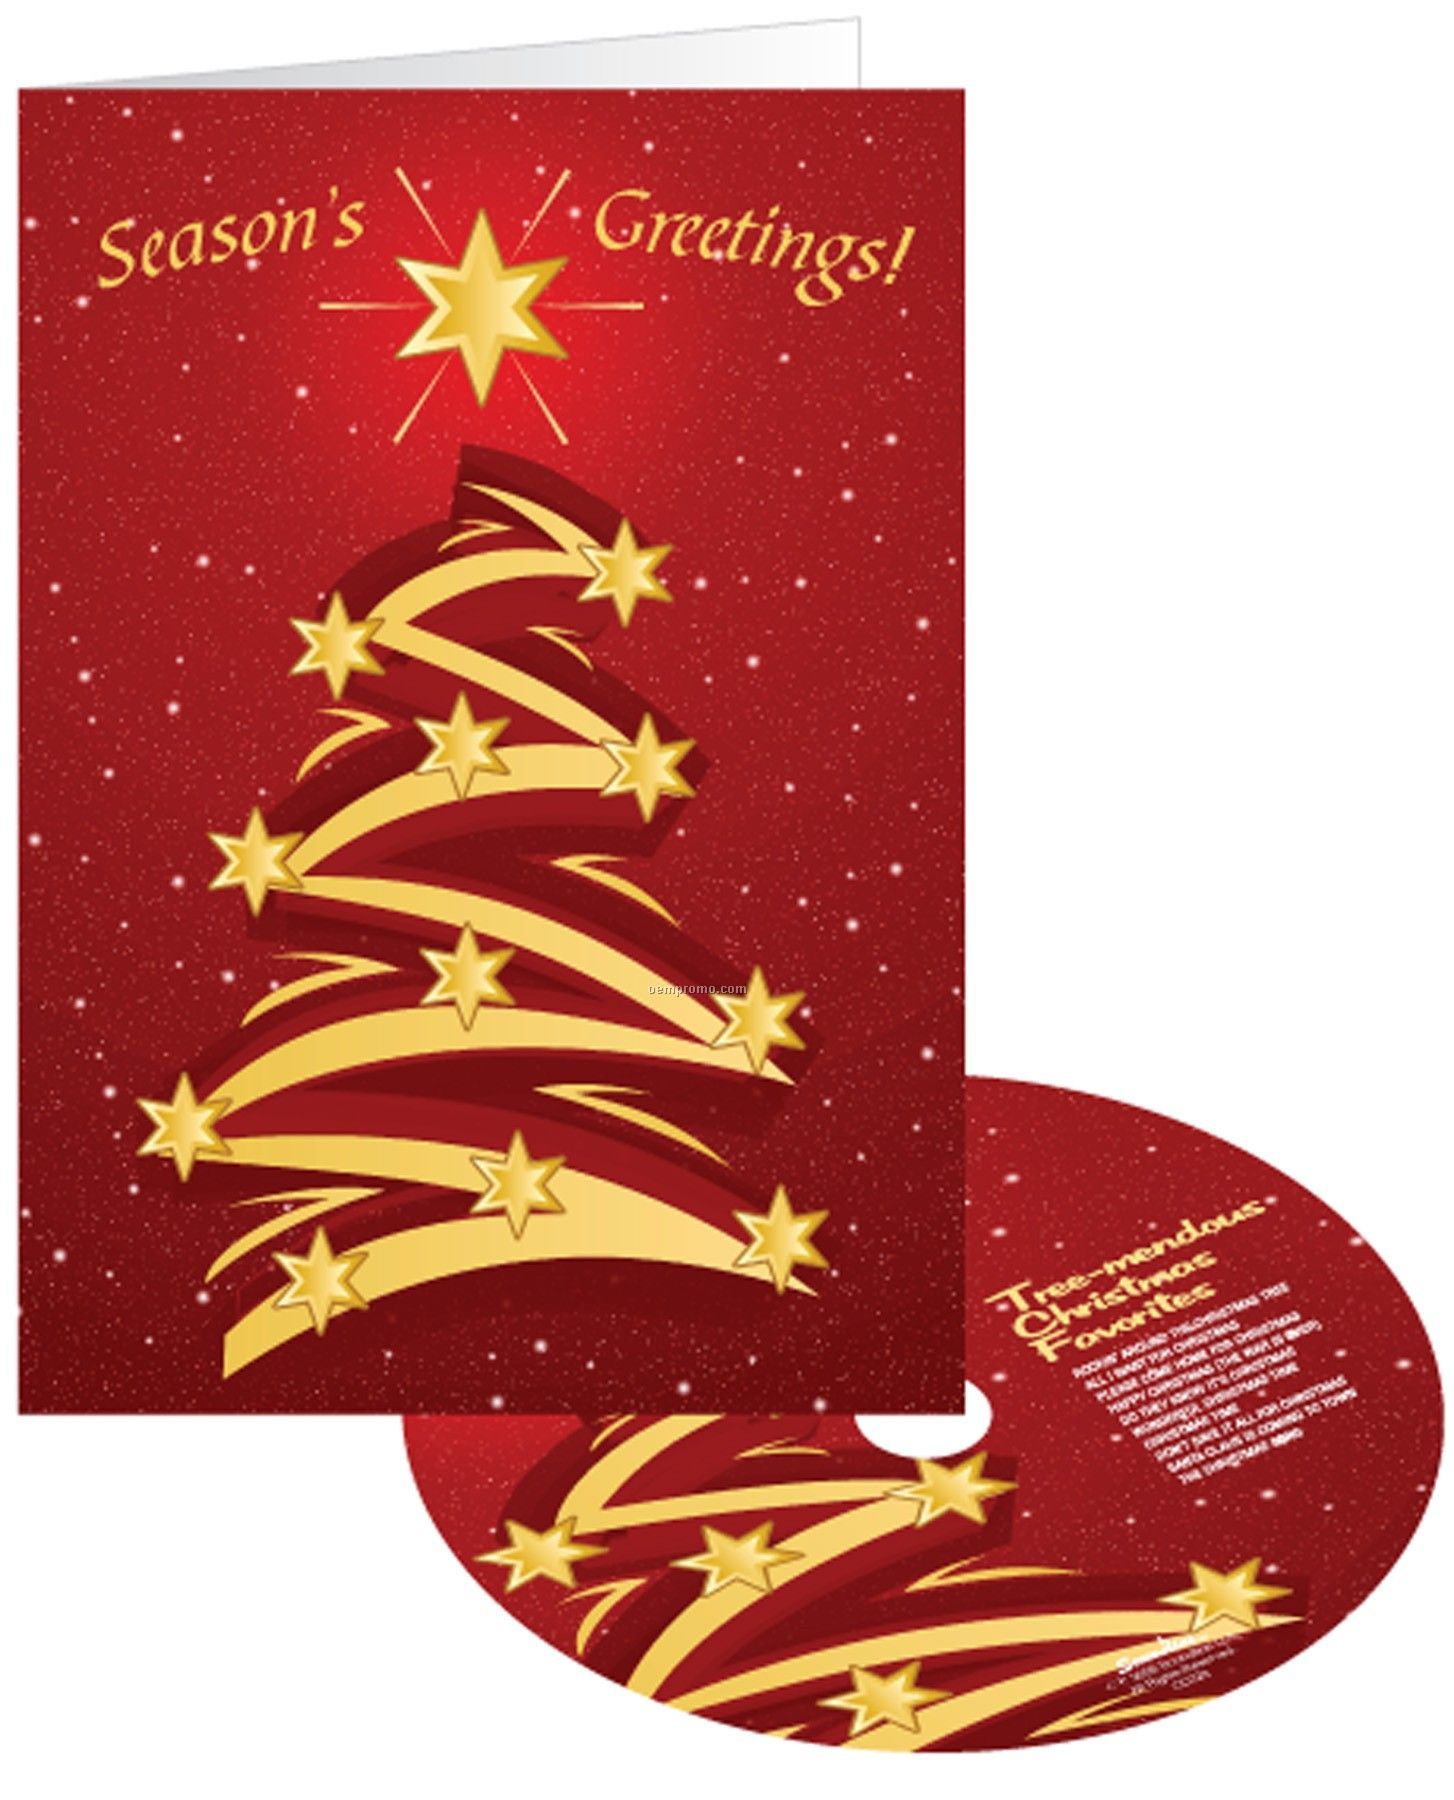 Creative Christmas Tree Holiday Greeting Card With Matching CD